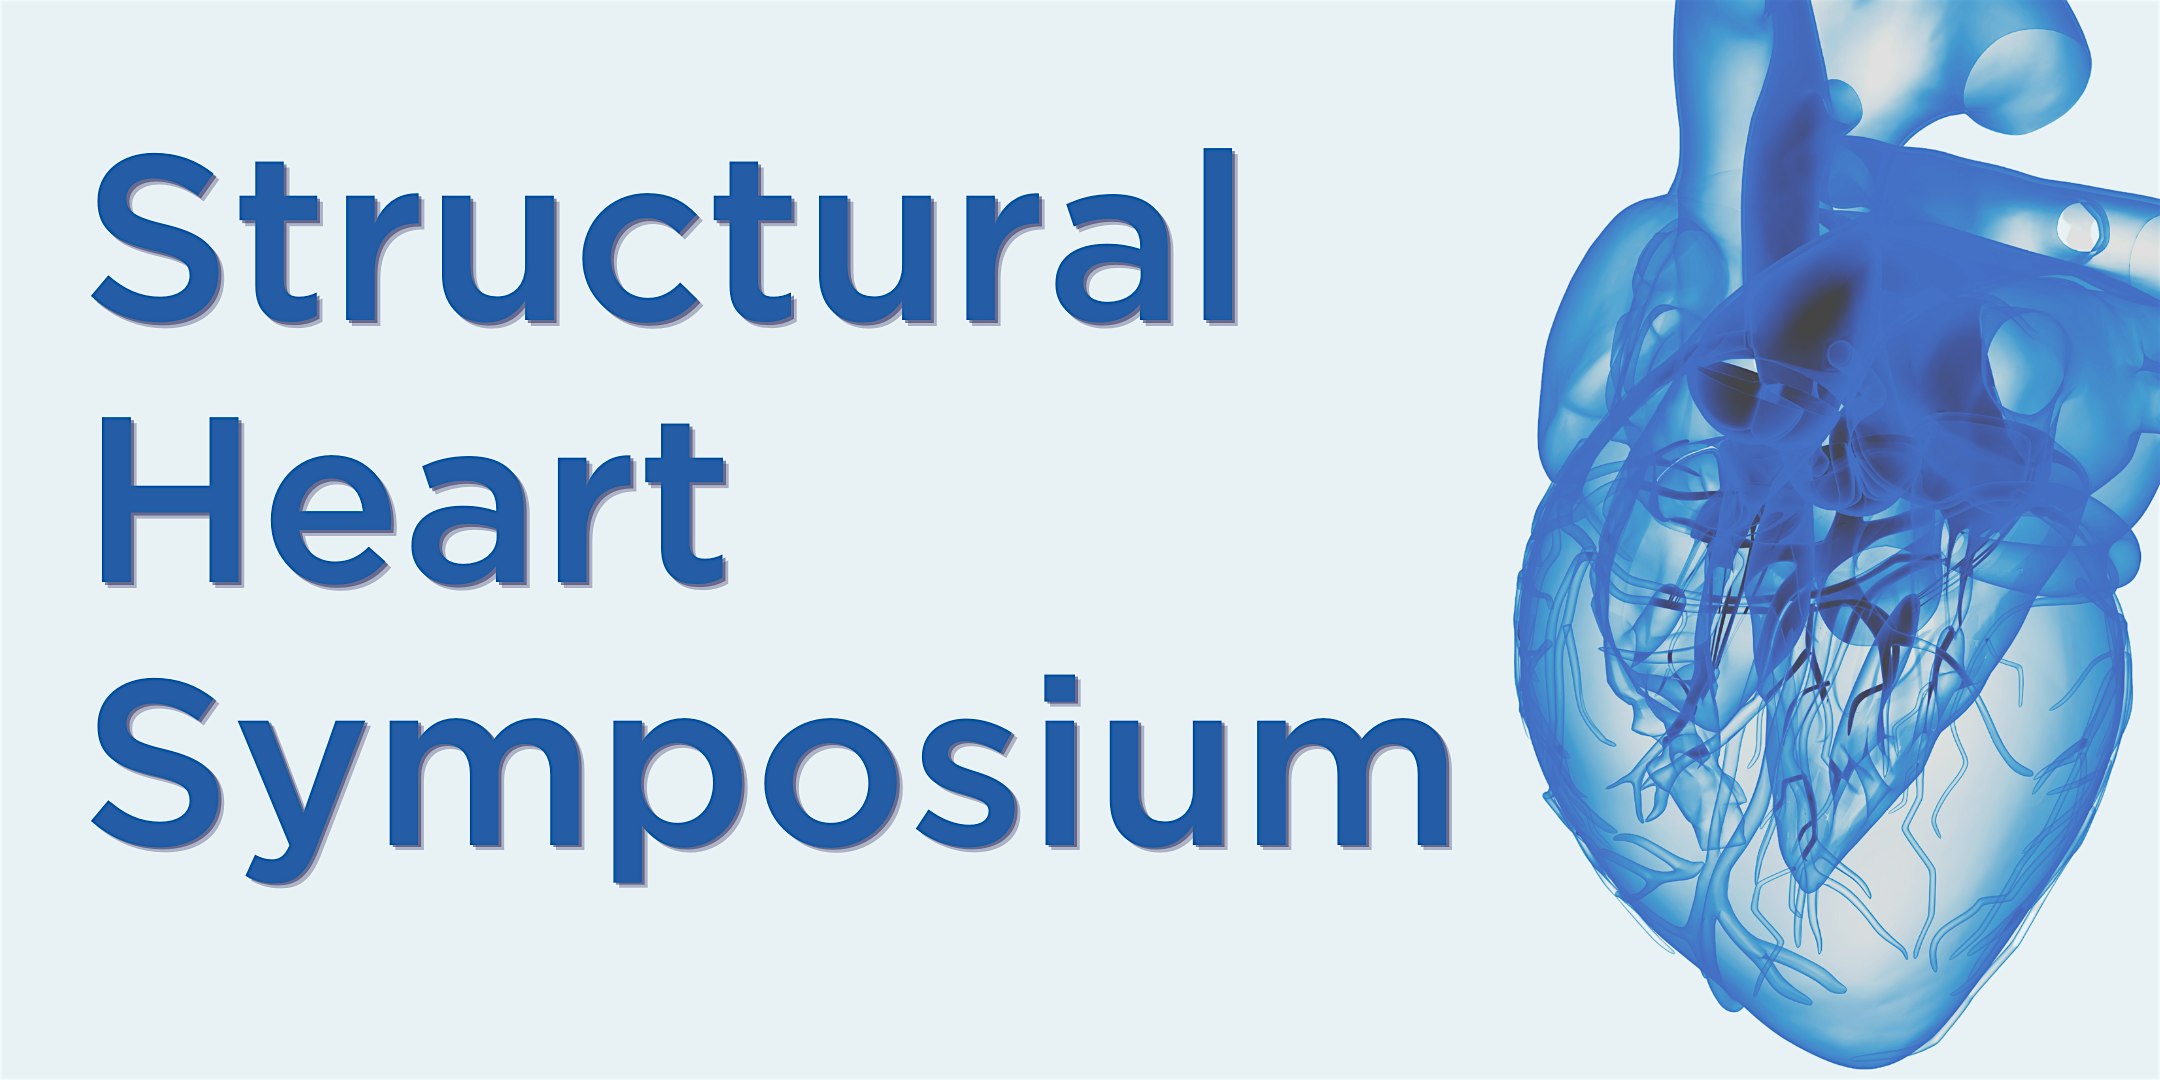 Structural Heart Symposium - Vendor Registration